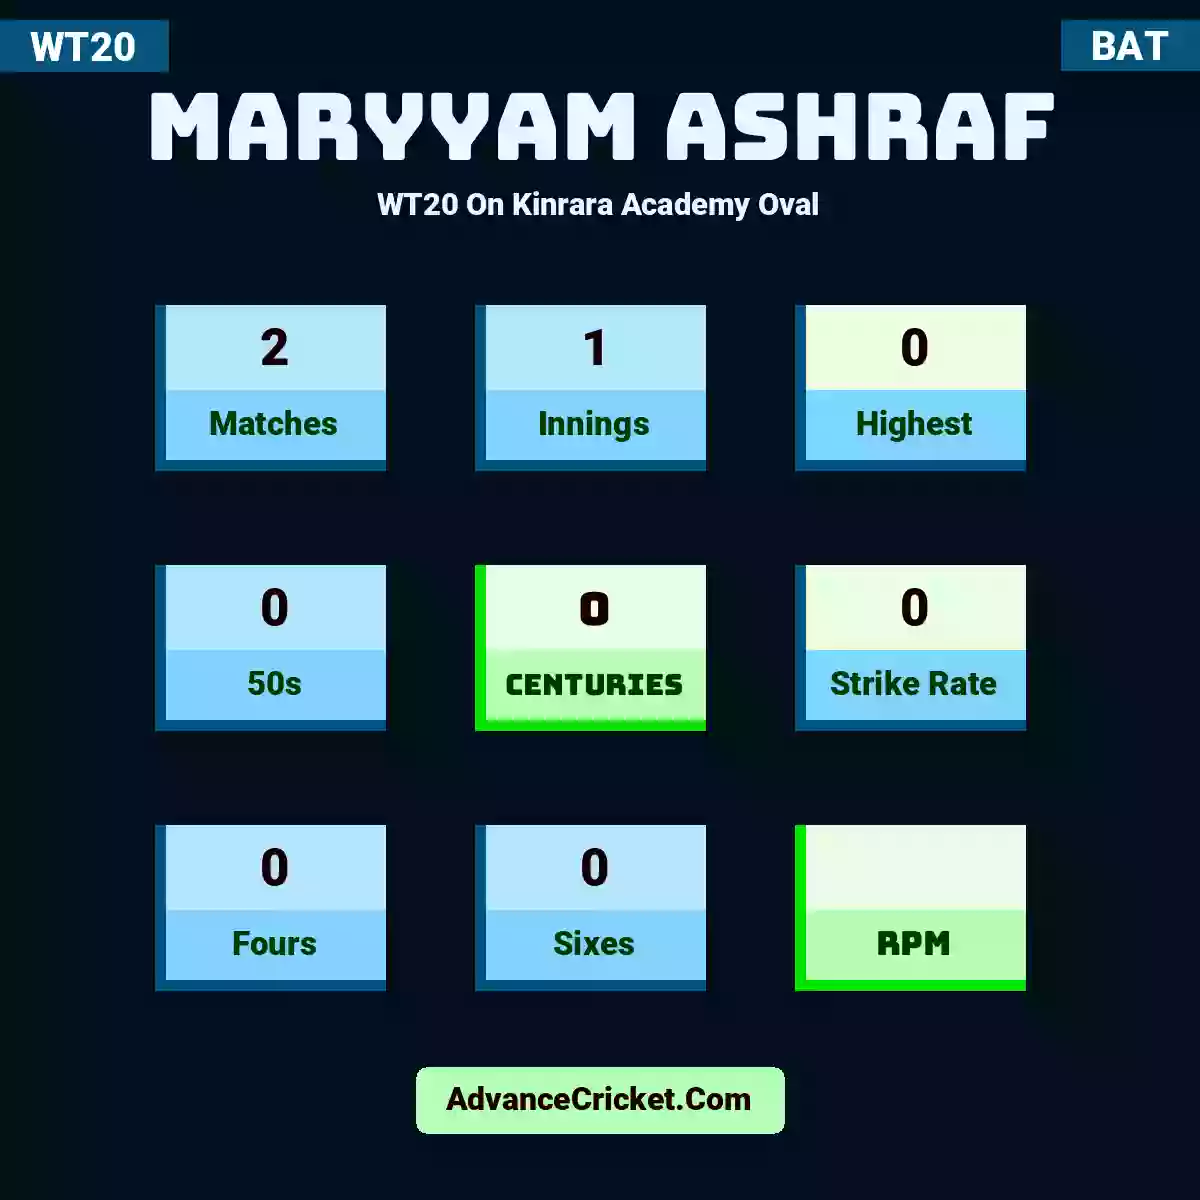 Maryyam Ashraf WT20  On Kinrara Academy Oval, Maryyam Ashraf played 2 matches, scored 0 runs as highest, 0 half-centuries, and 0 centuries, with a strike rate of 0. M.Ashraf hit 0 fours and 0 sixes.